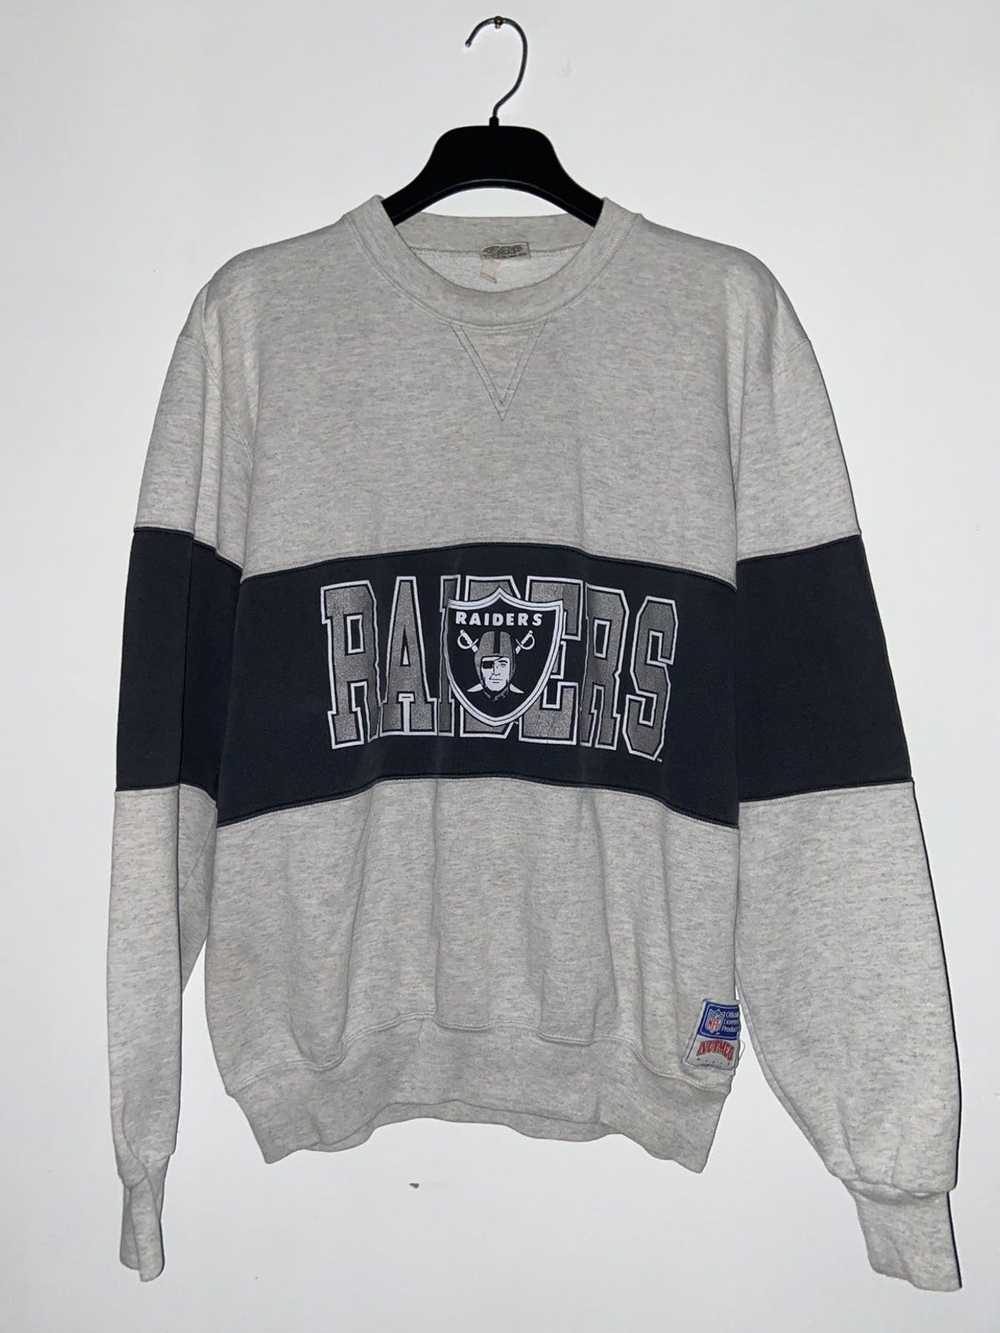 Airbrush Raiders Shirt, Los Angeles Raiders, Skull and Bandana Design for  Raiders Fans. — AM Style Entertainment